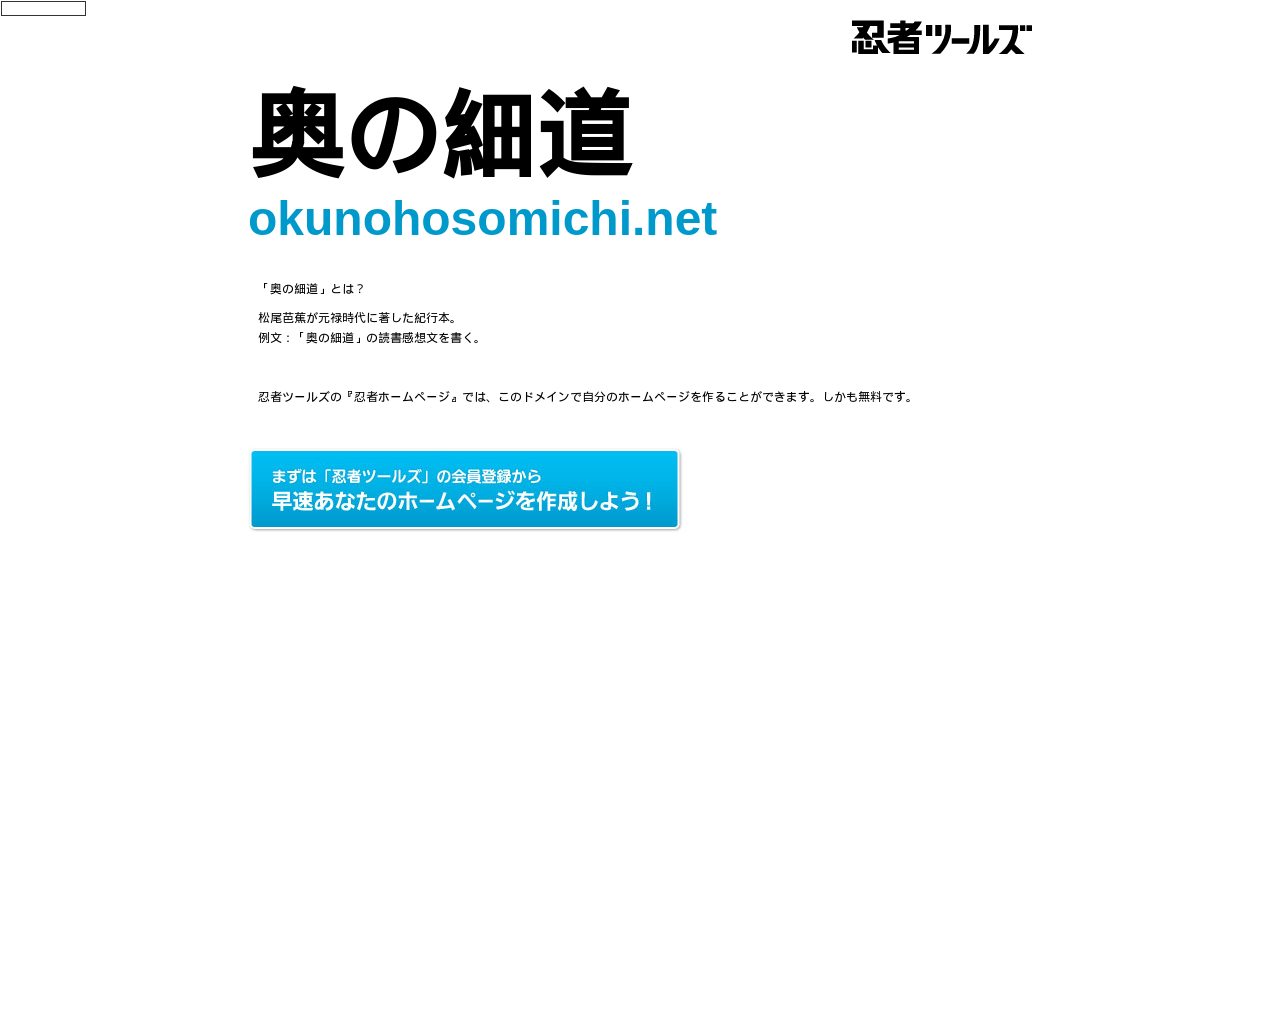 okunohosomichi.net